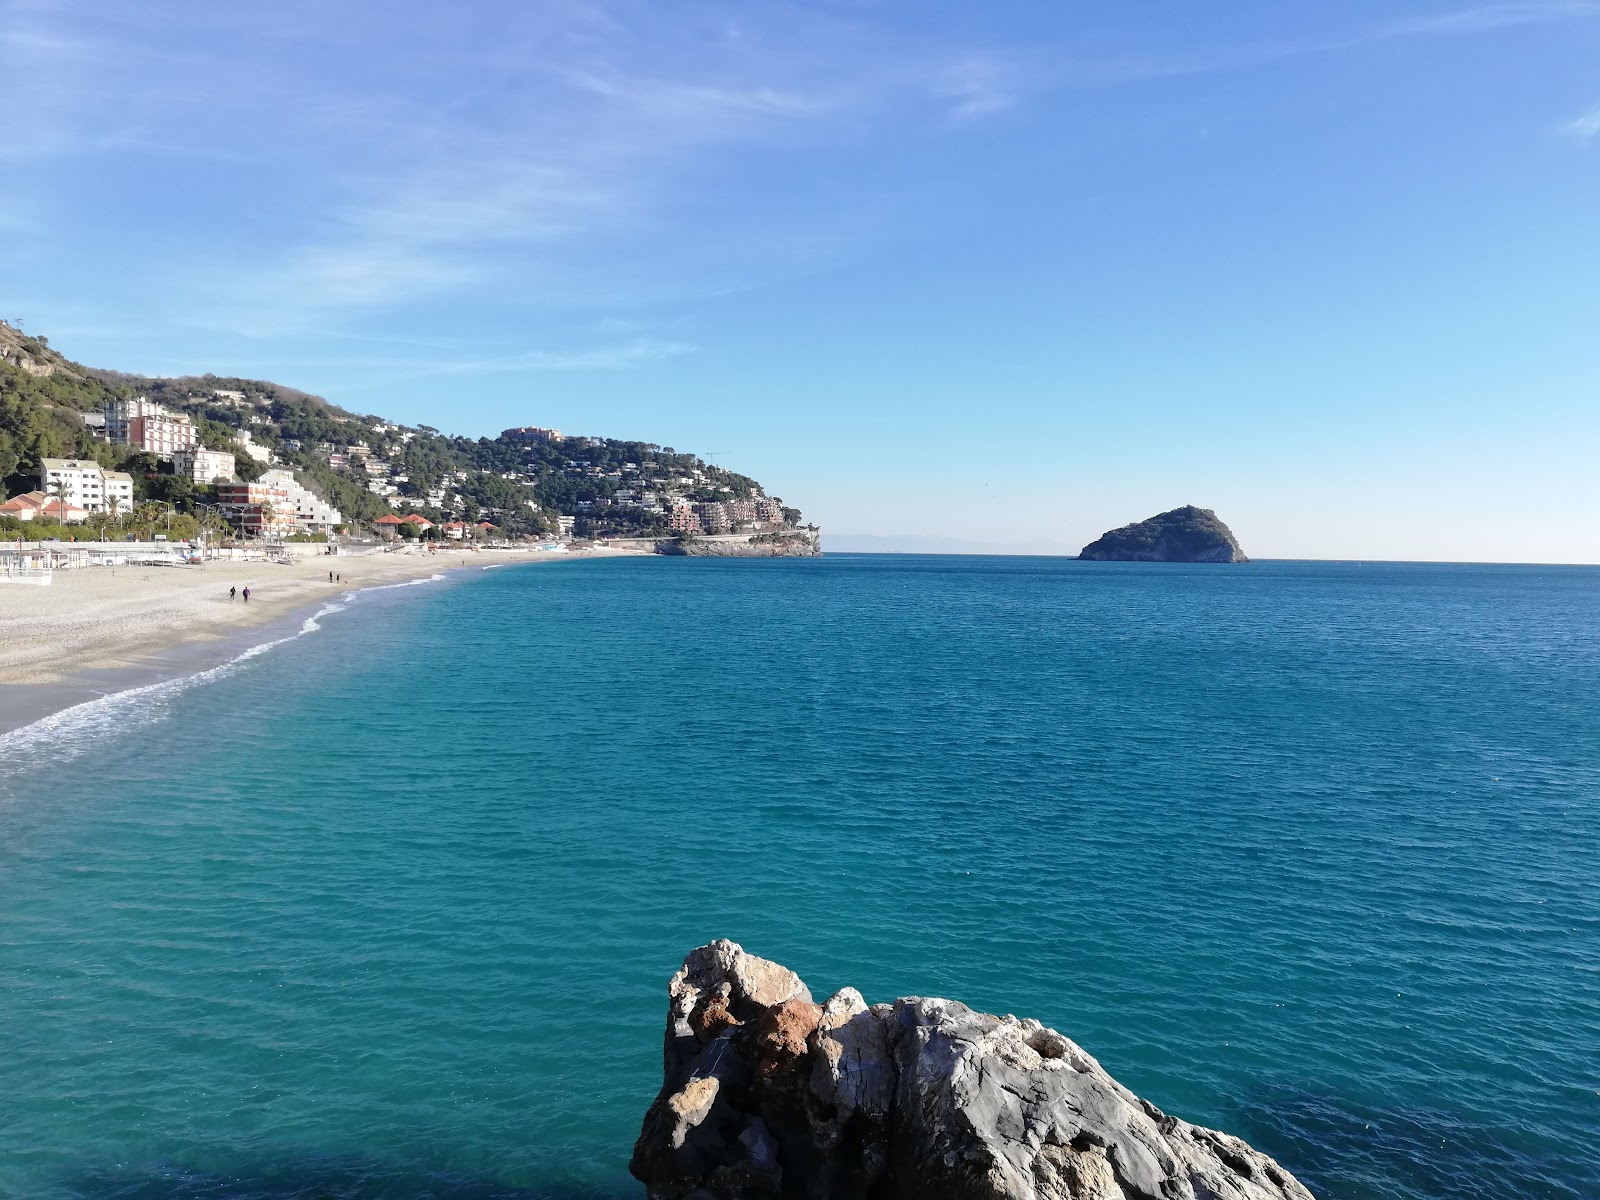 Foto von Spiaggia di Spotorno mit langer gerader strand